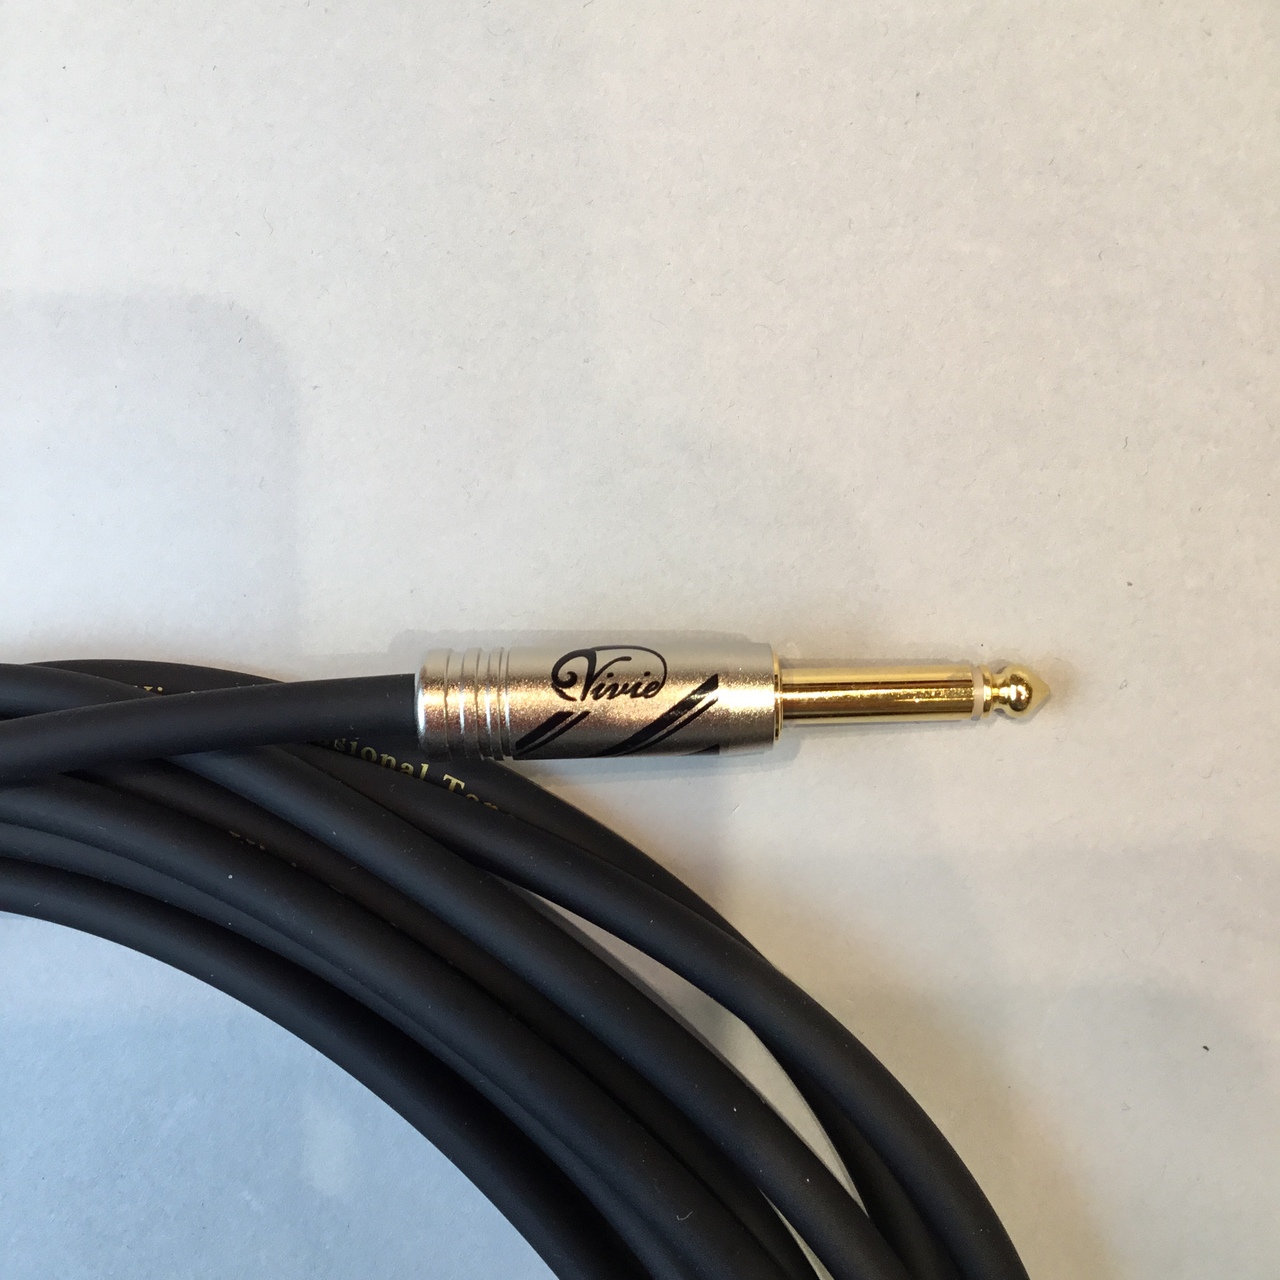 Vivie (ビビー)Vivie Professional Tone Cable 5m S-S/シールド 